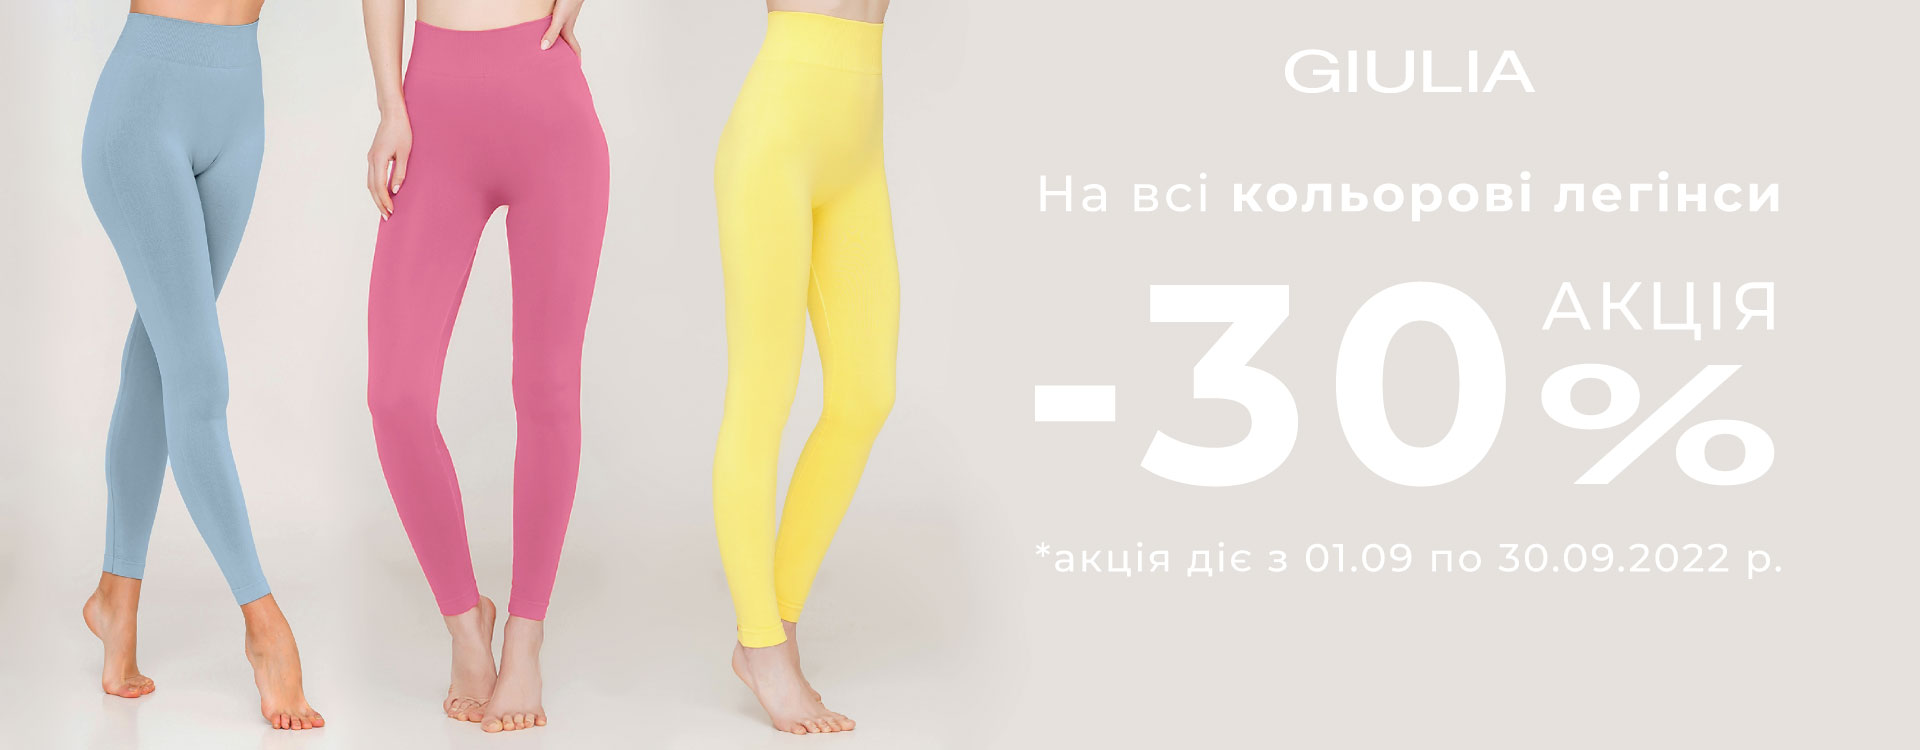 GIULIA DISCOUNT -30% on all colored leggings